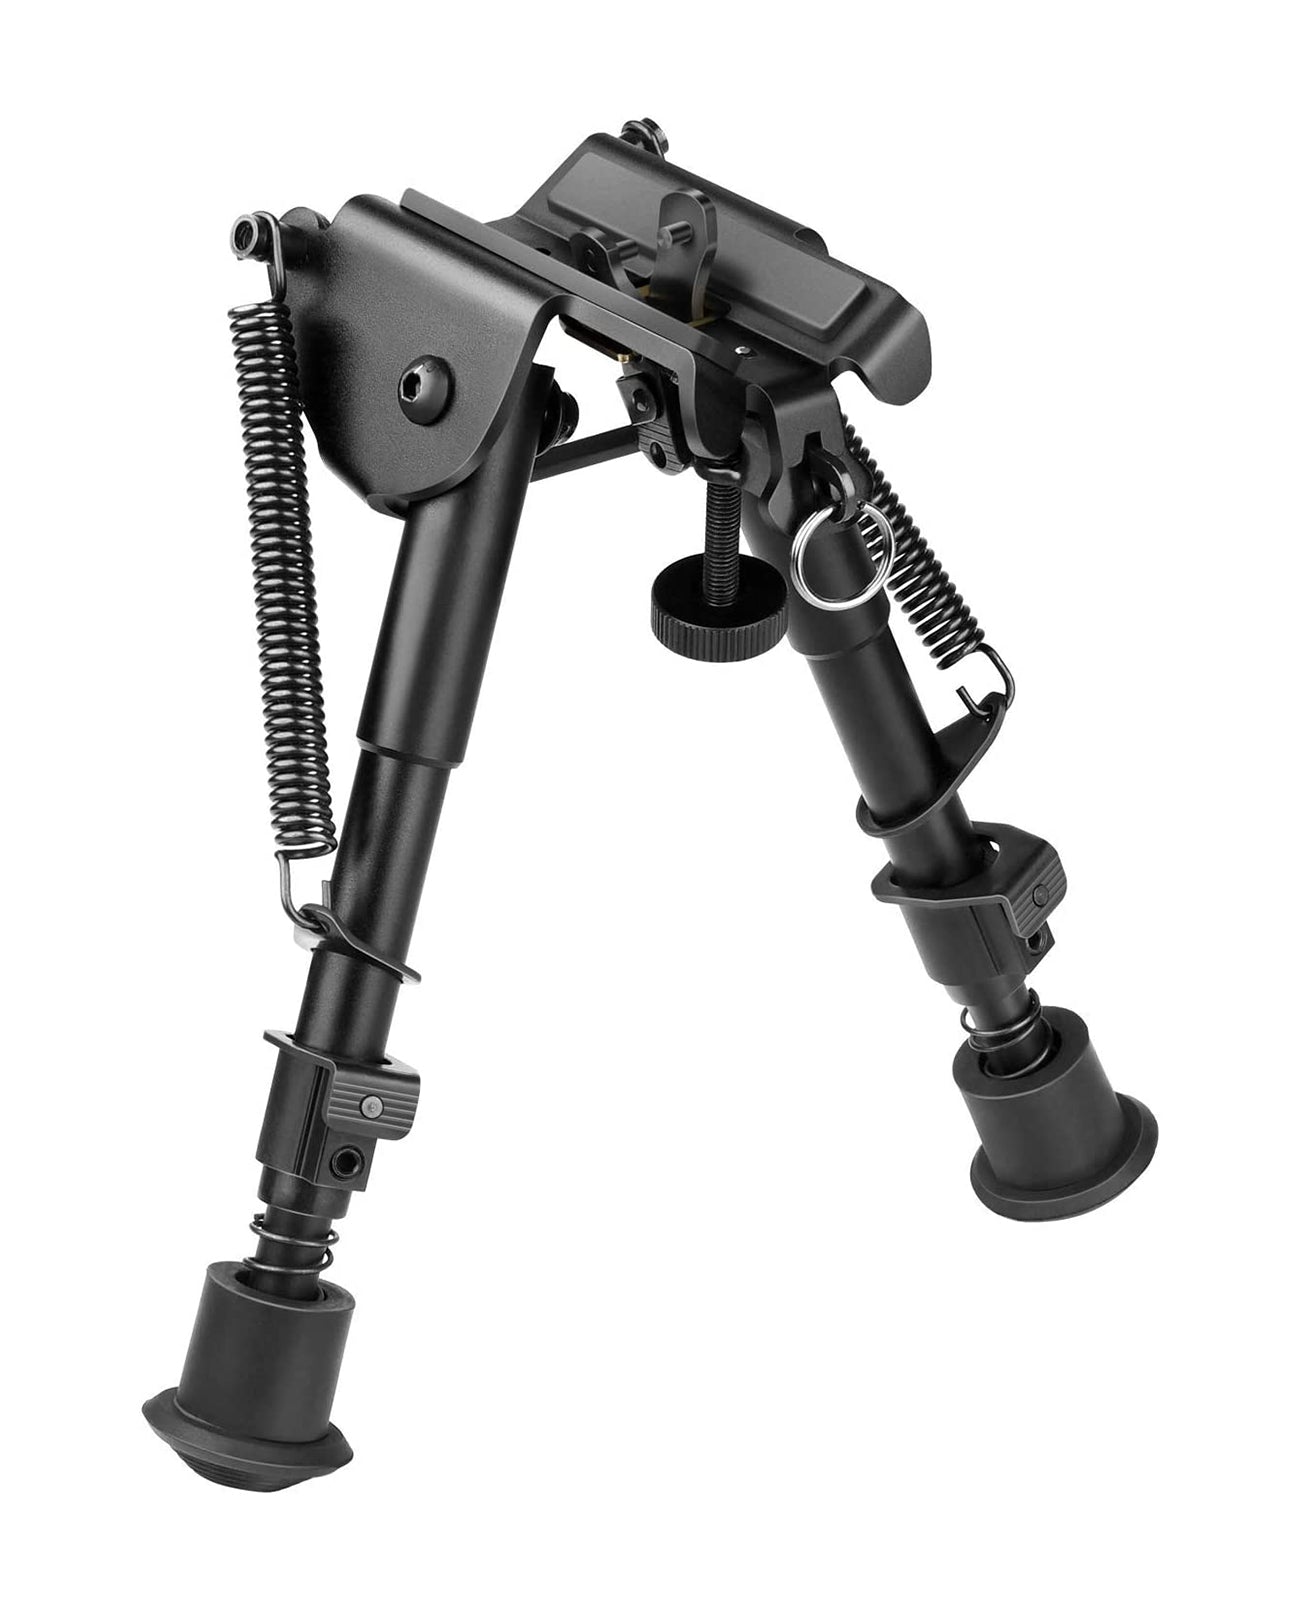 EZshoot Rifle Bipod 6-9 Inches Adjustable Super Duty Tactical Bipod